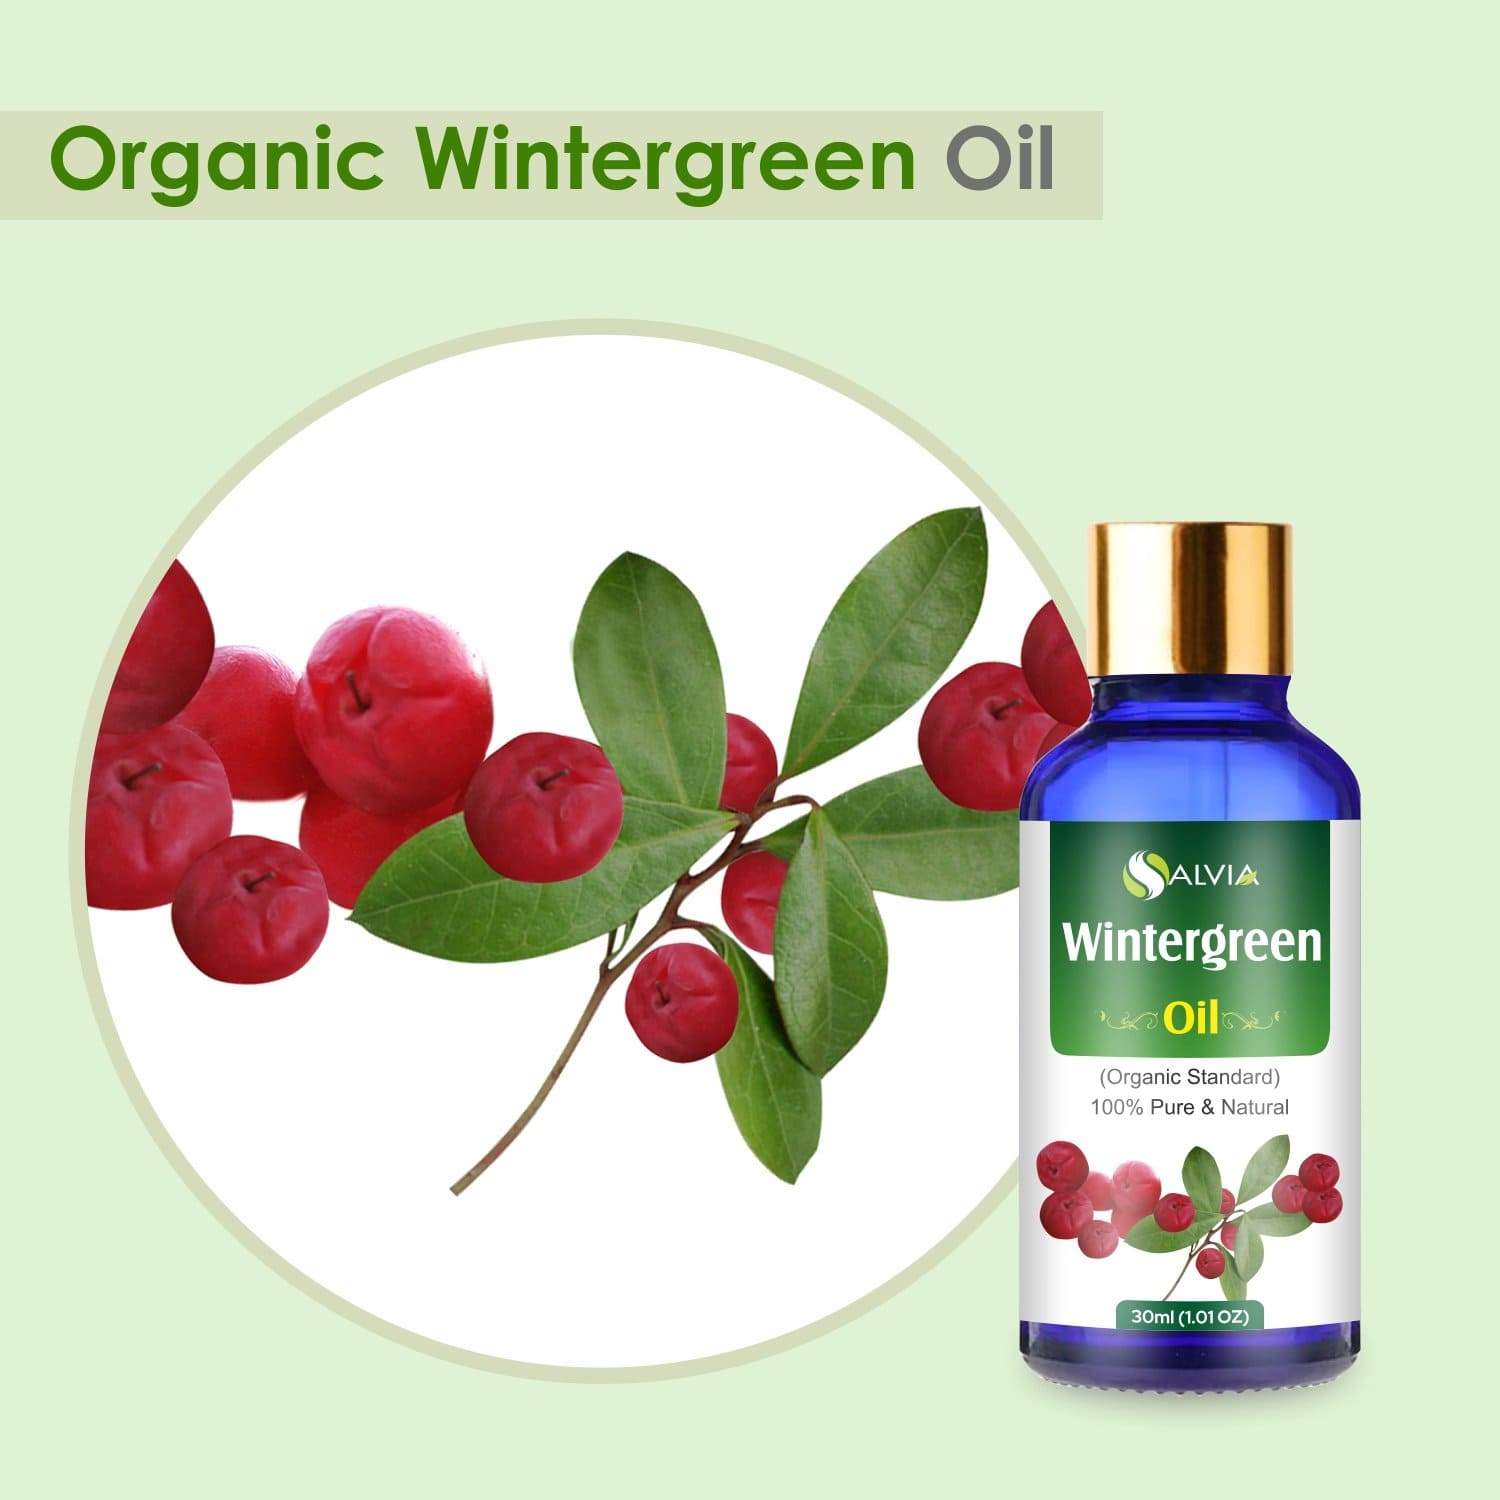 Organic Wintergreen Essential Oil benefits 